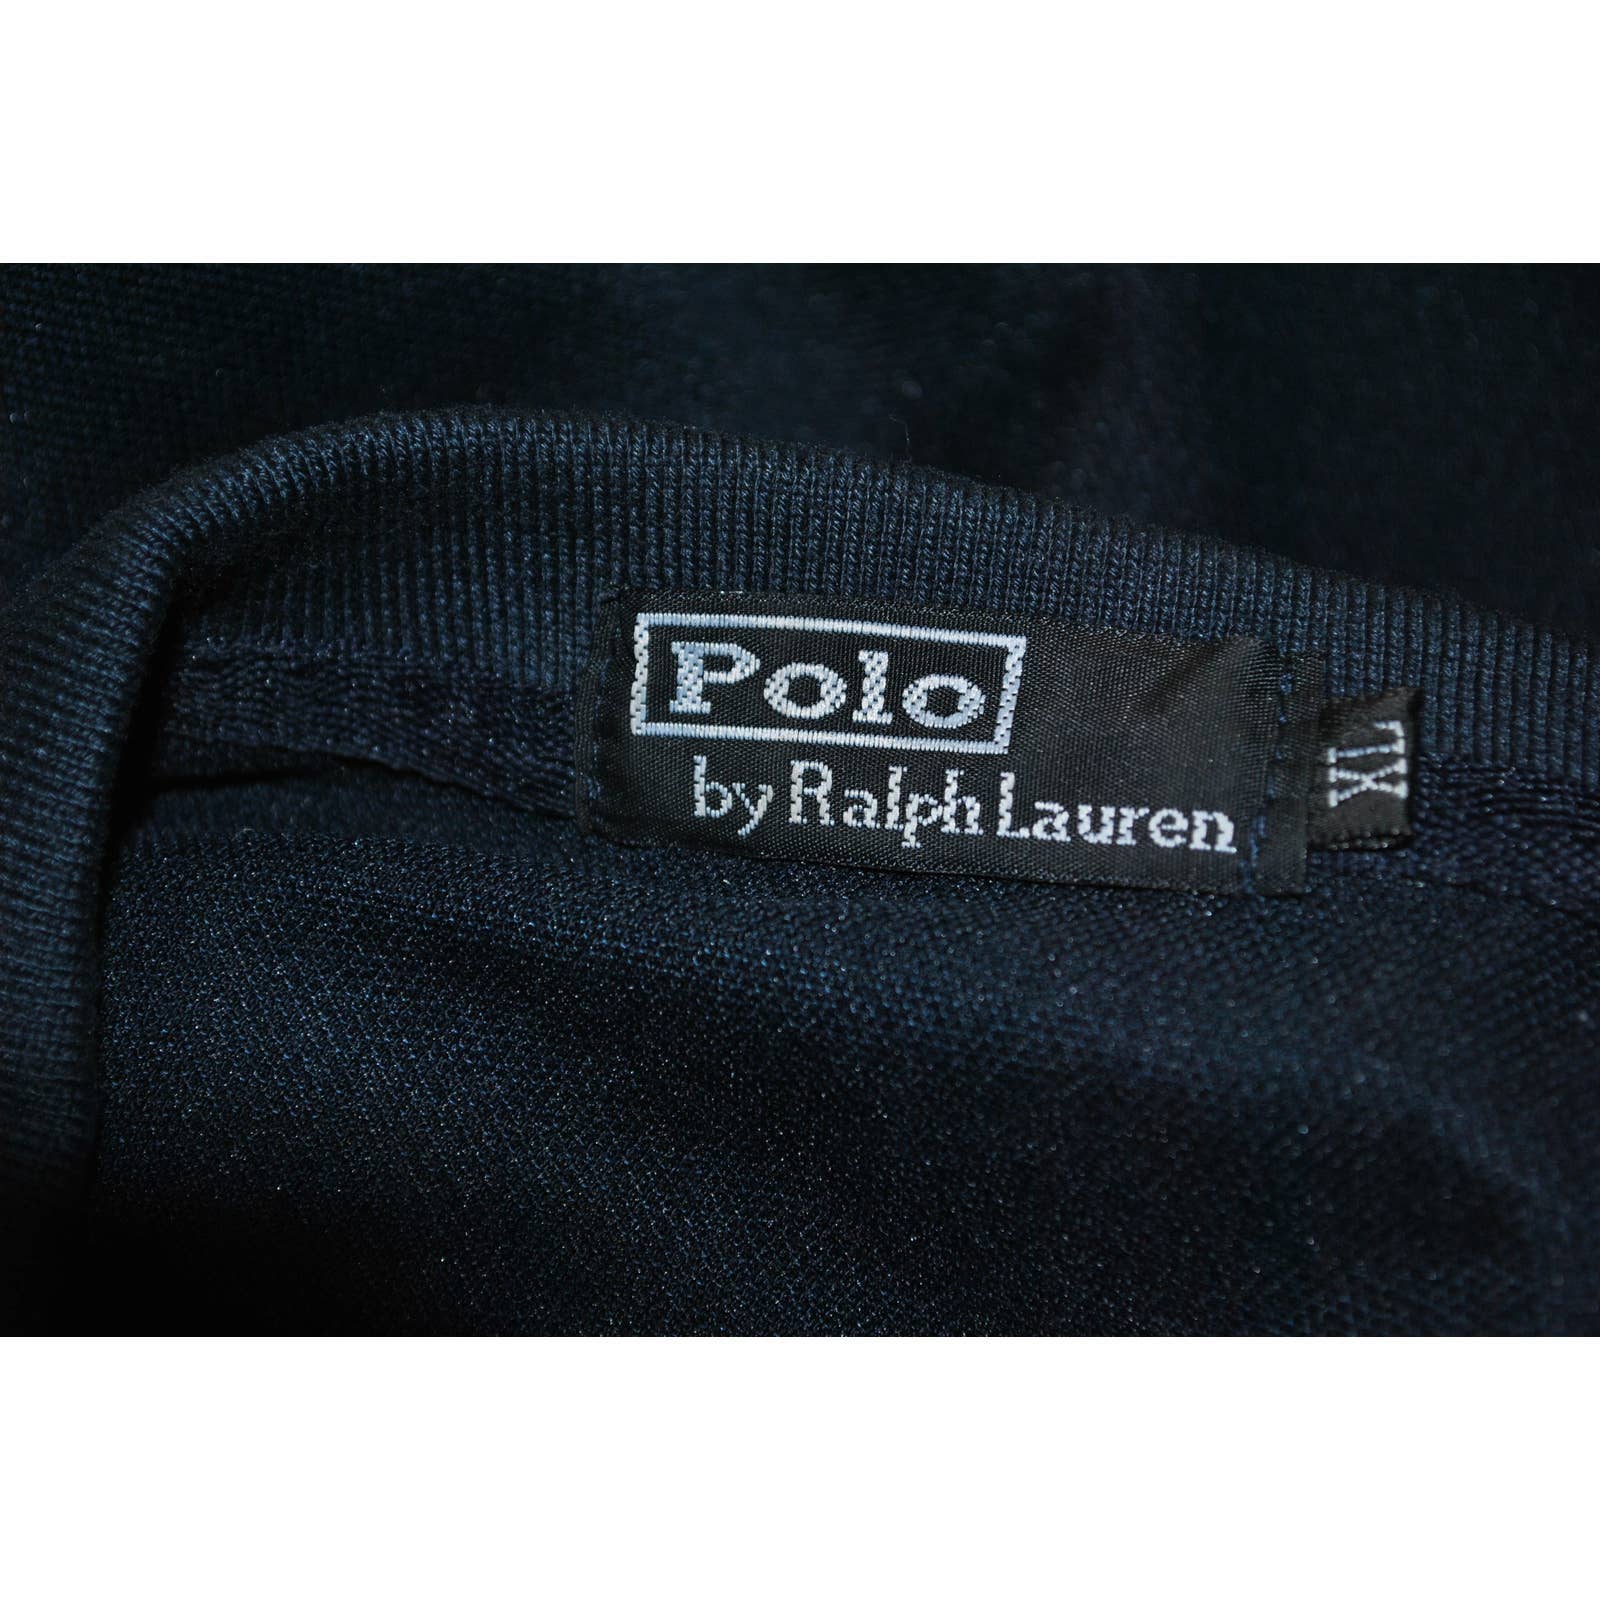 Polo Ralph Lauren Navy Blue White Trim Polo Shirt - XL